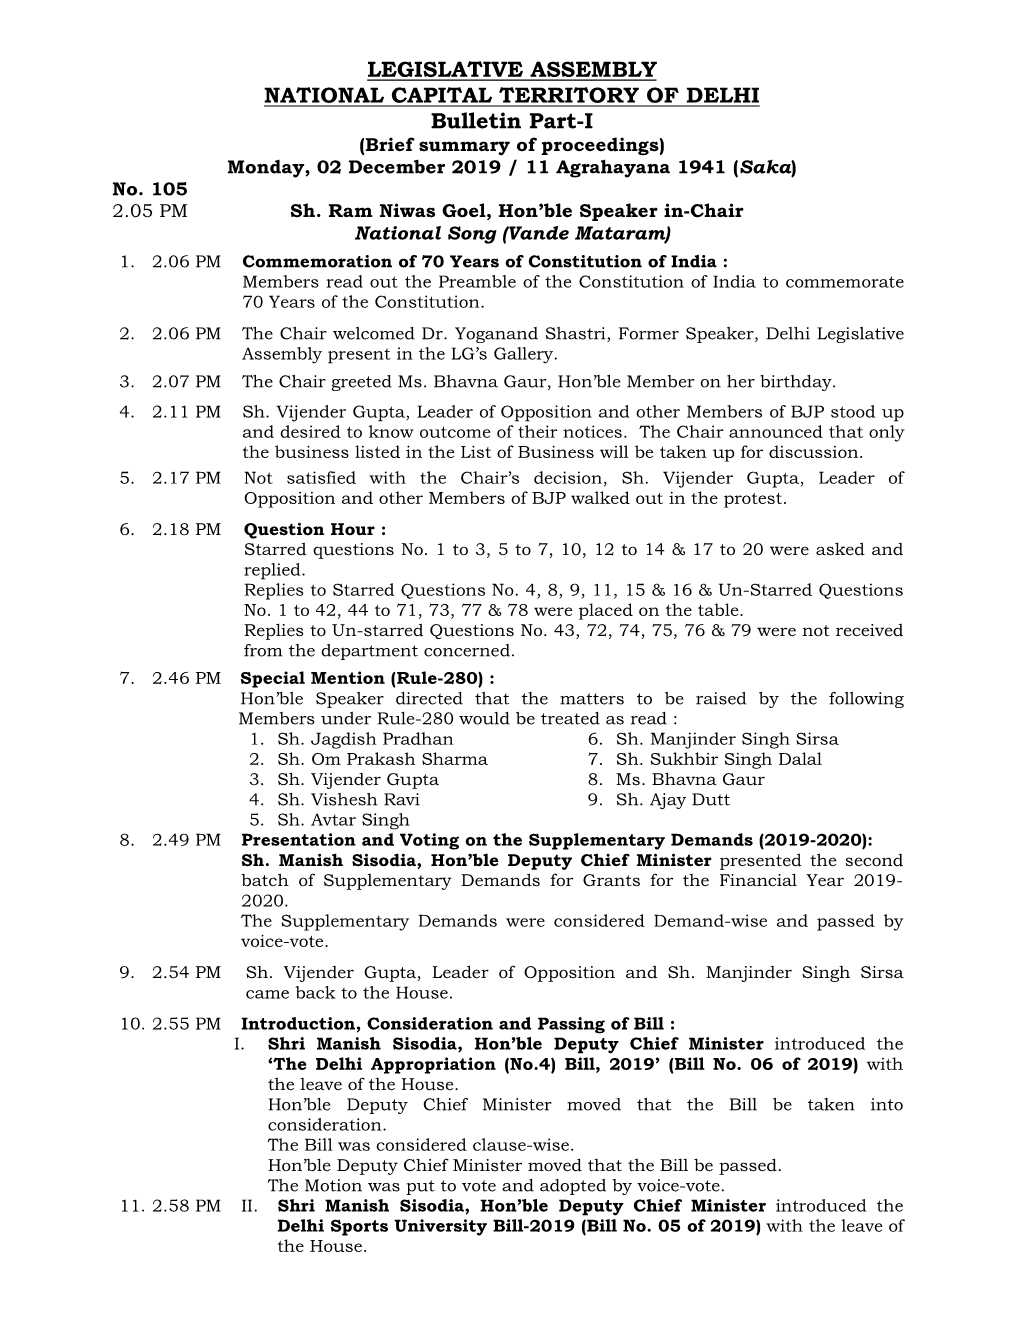 LEGISLATIVE ASSEMBLY NATIONAL CAPITAL TERRITORY of DELHI Bulletin Part-I (Brief Summary of Proceedings) Monday, 02 December 2019 / 11 Agrahayana 1941 (Saka ) No